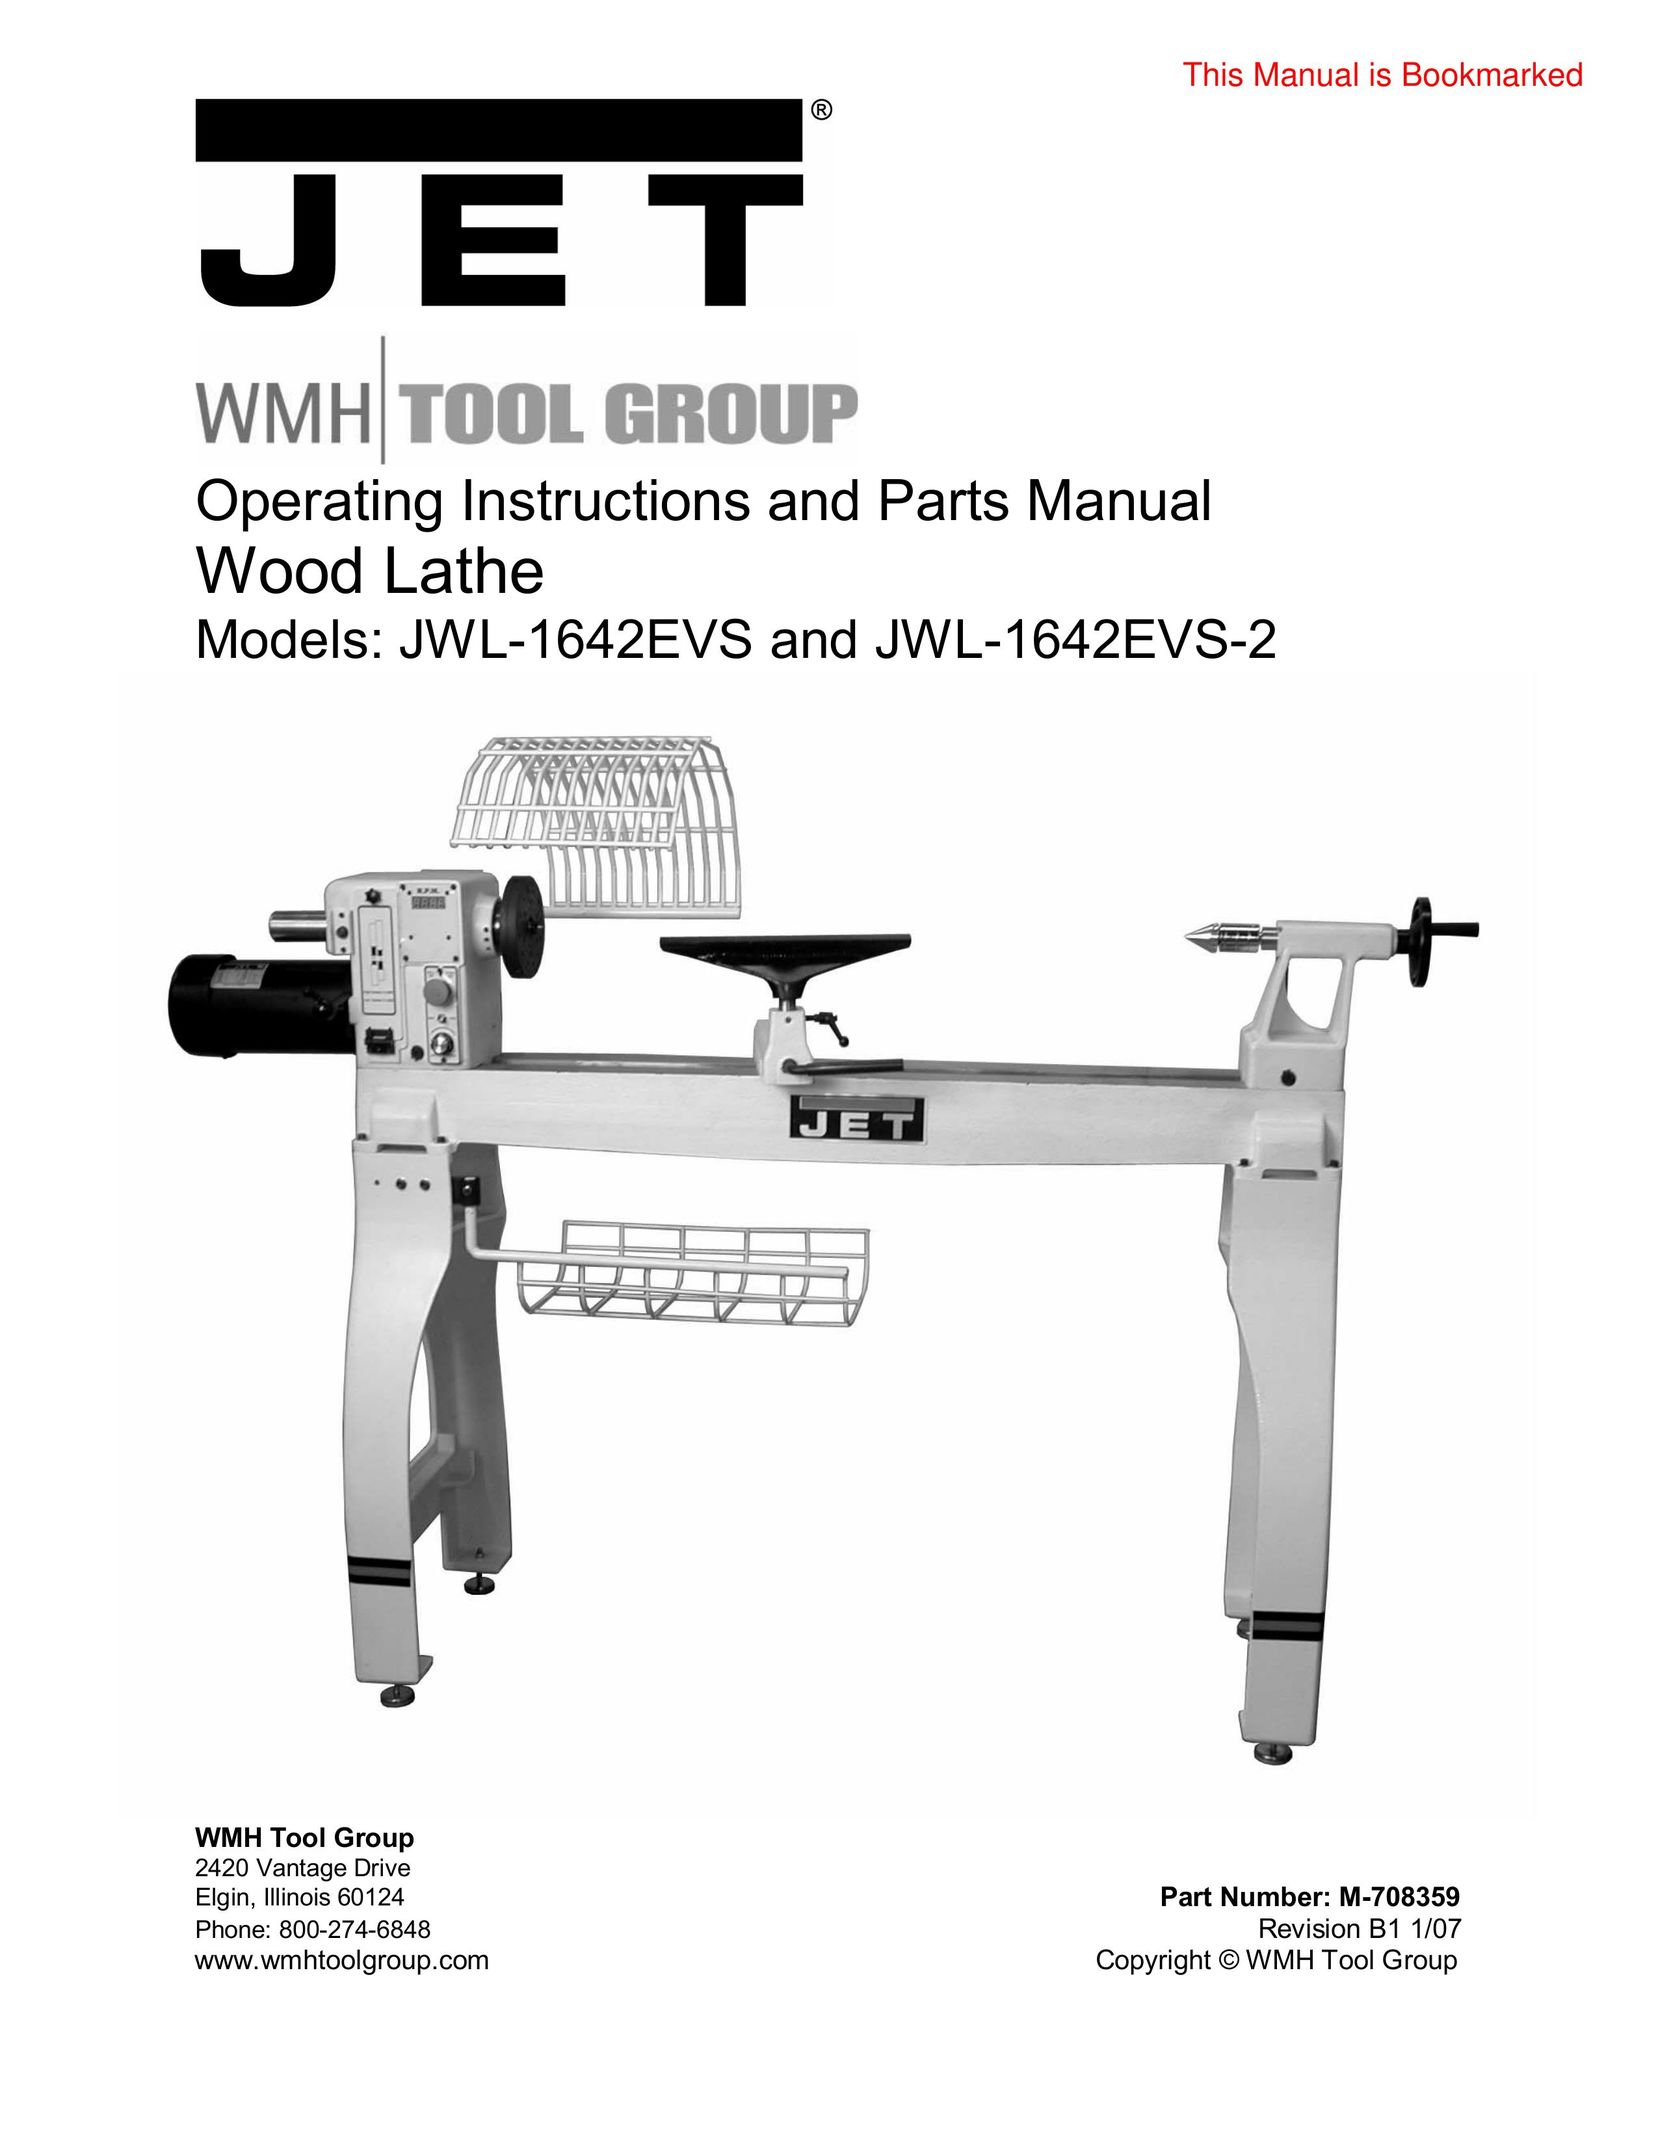 Jet Tools JWL-1642EVS-2 Lathe User Manual